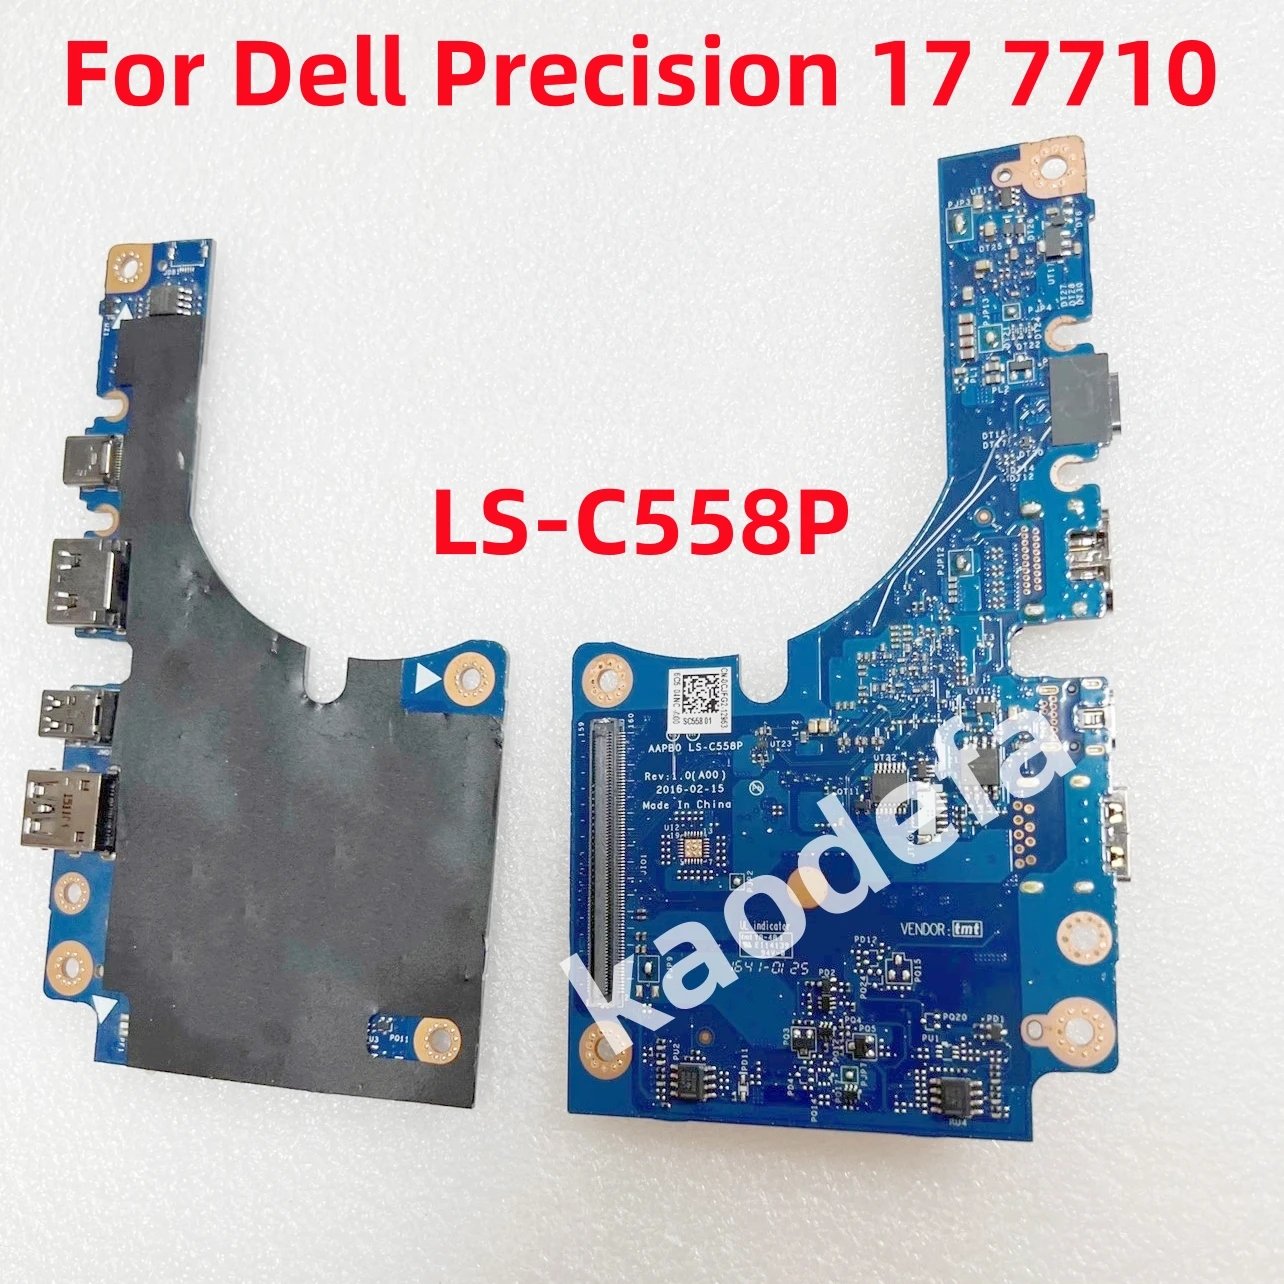 

LS-C558P For Dell Precision 17 7710 Laptop USB Small Board Built-in Interface Board CN-0CJFG2 0CJFG2 CJFG2 100% Test OK